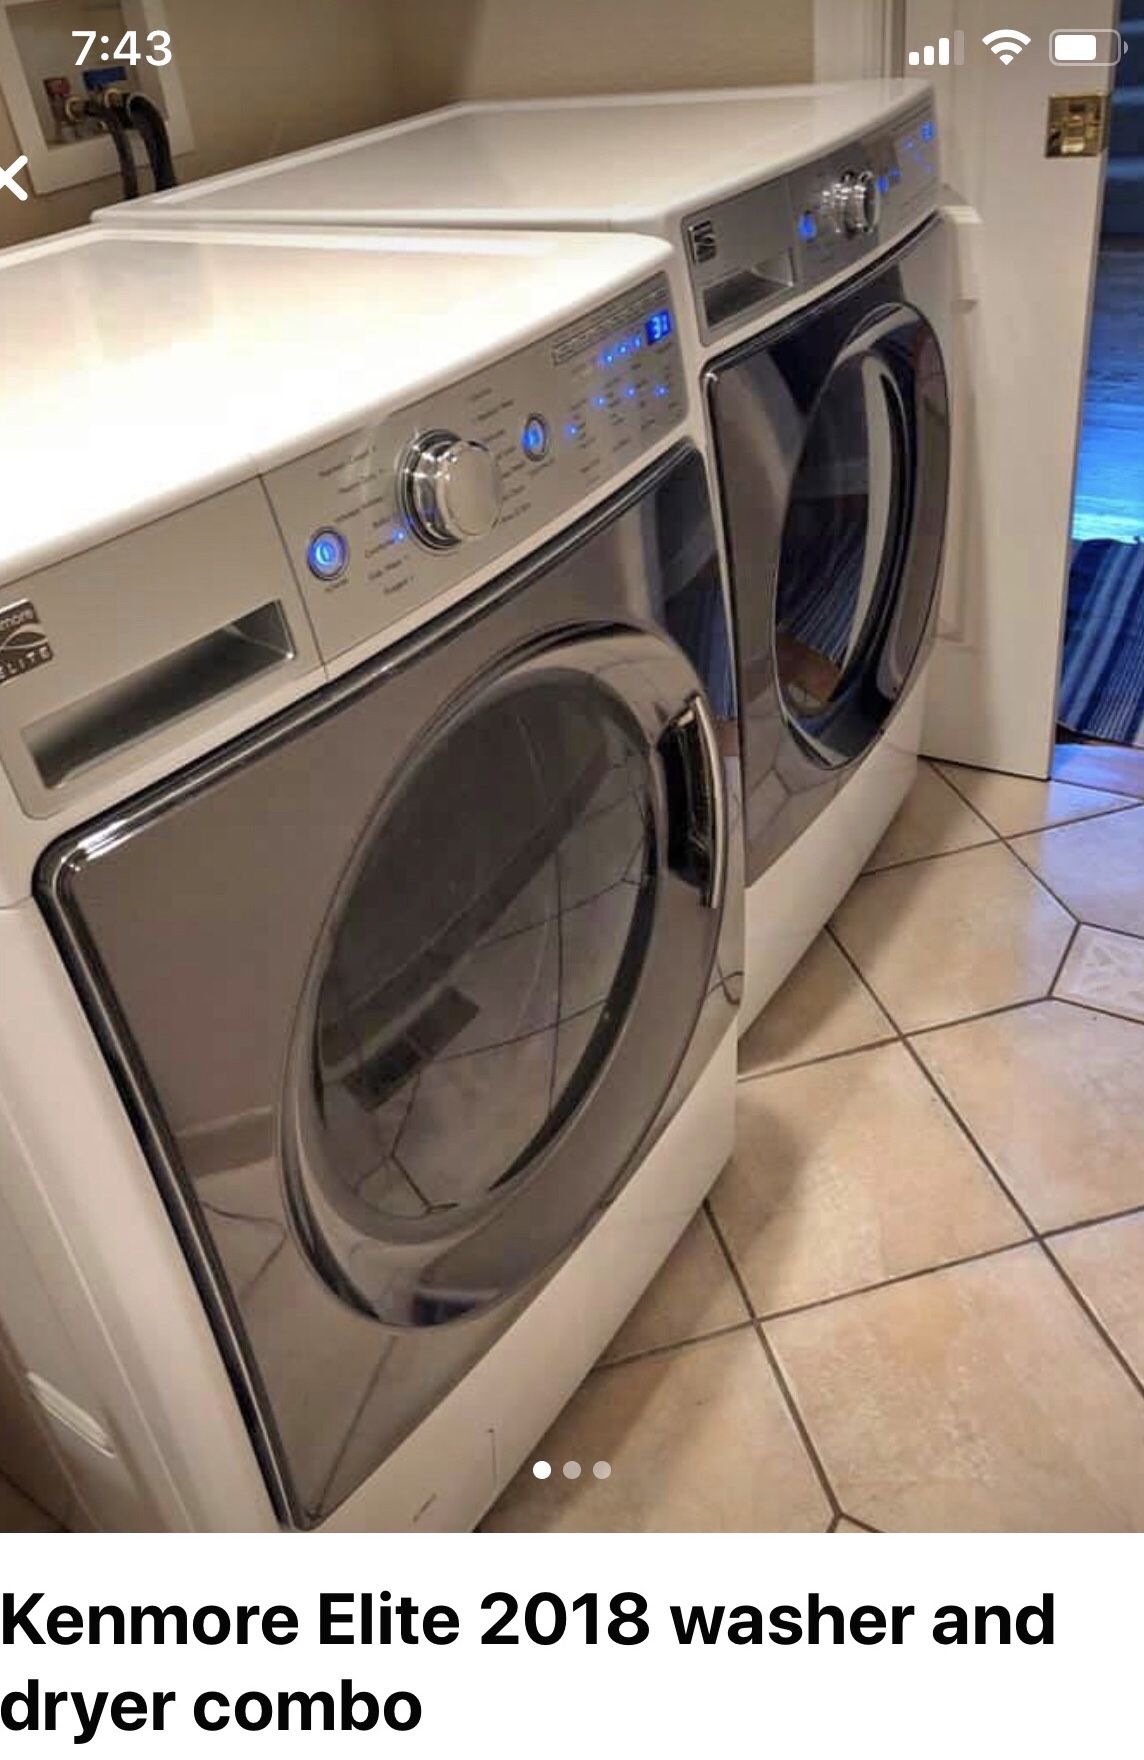 Kenmore Elite Washing and Drying machines